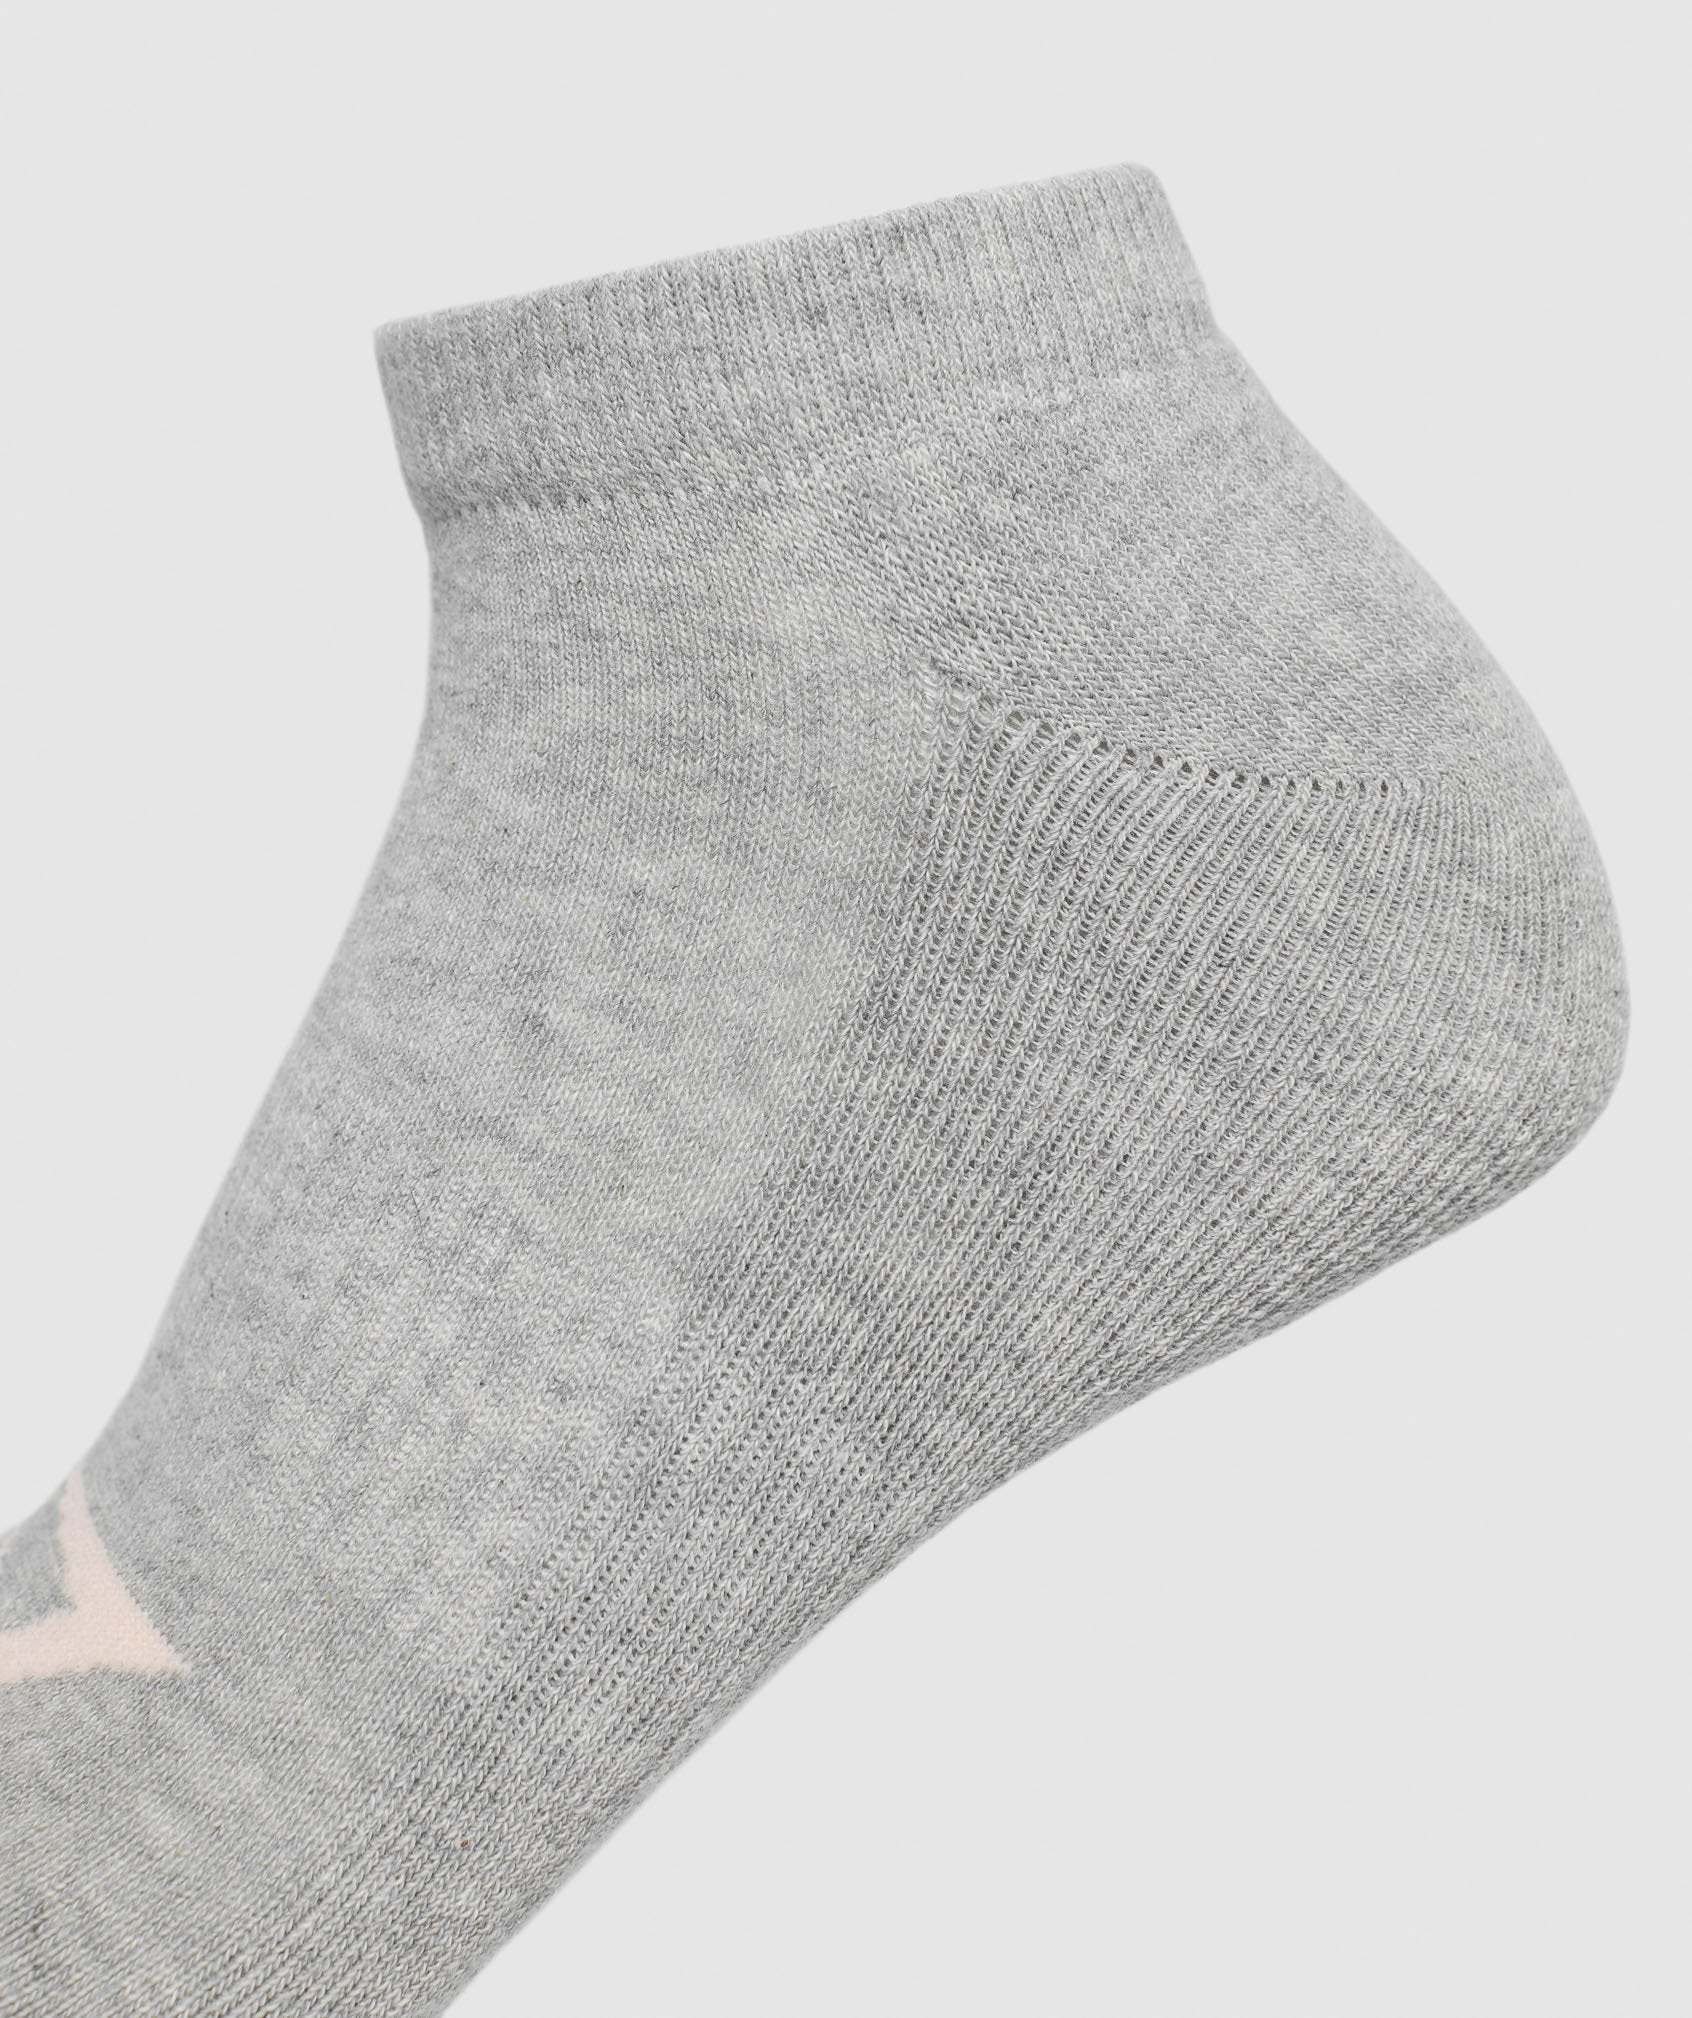 Womens Ladies Trainer Socks (3pk) in White/Oyster White/Black - view 3